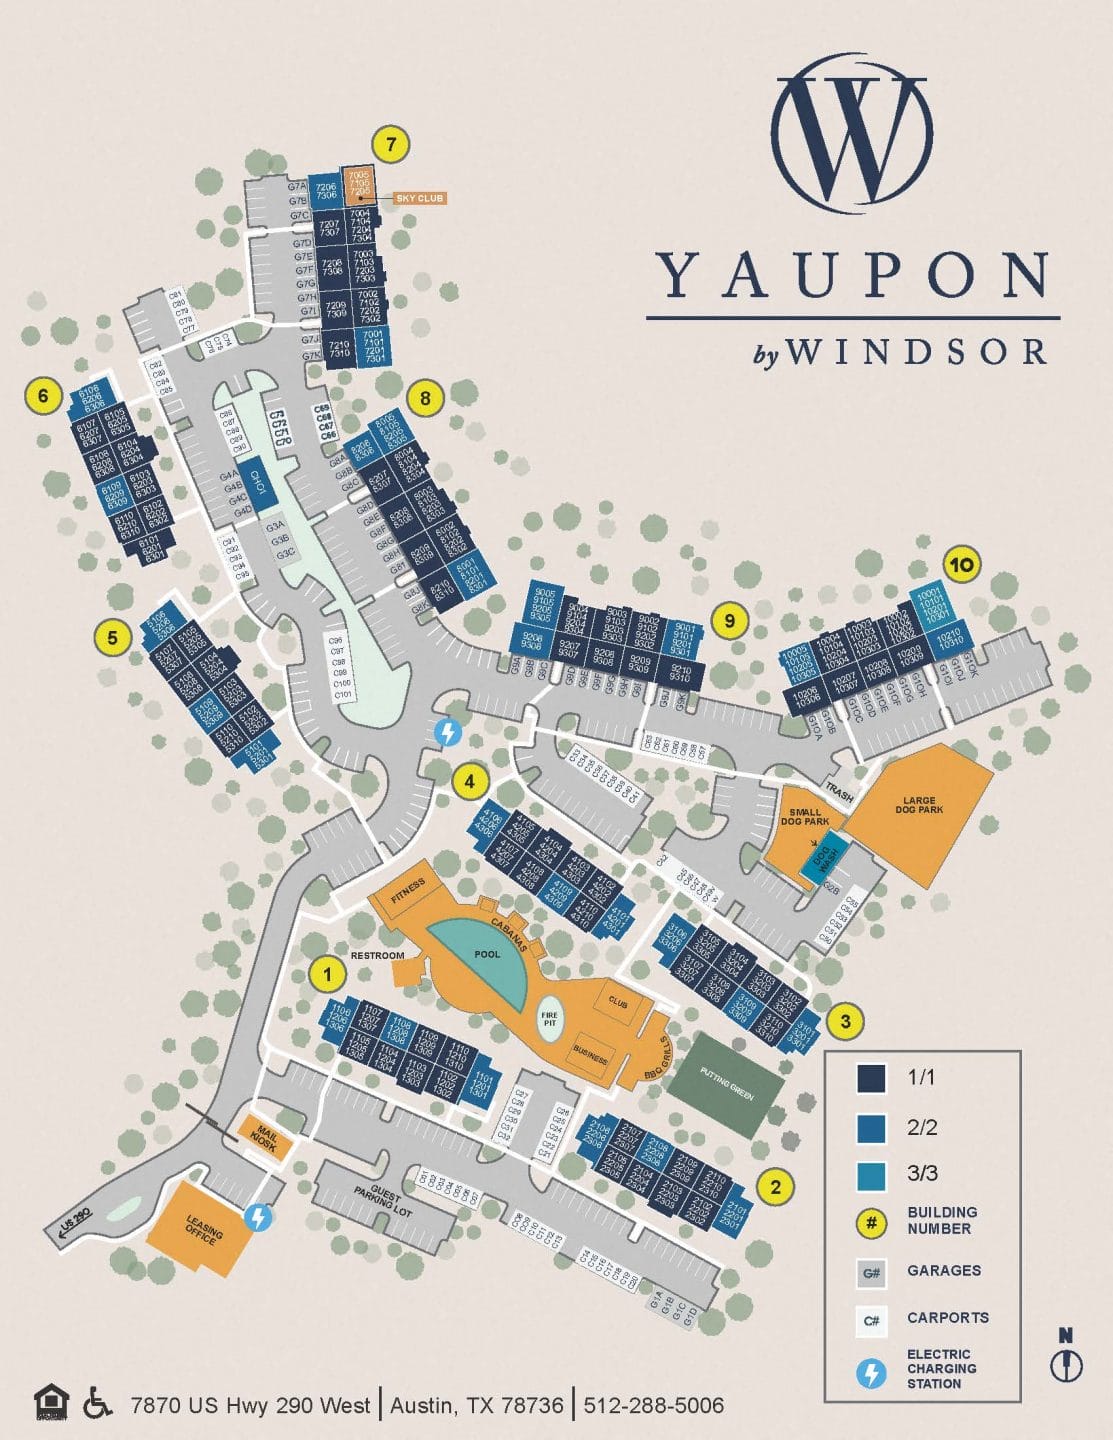 Yaupon by Windsor